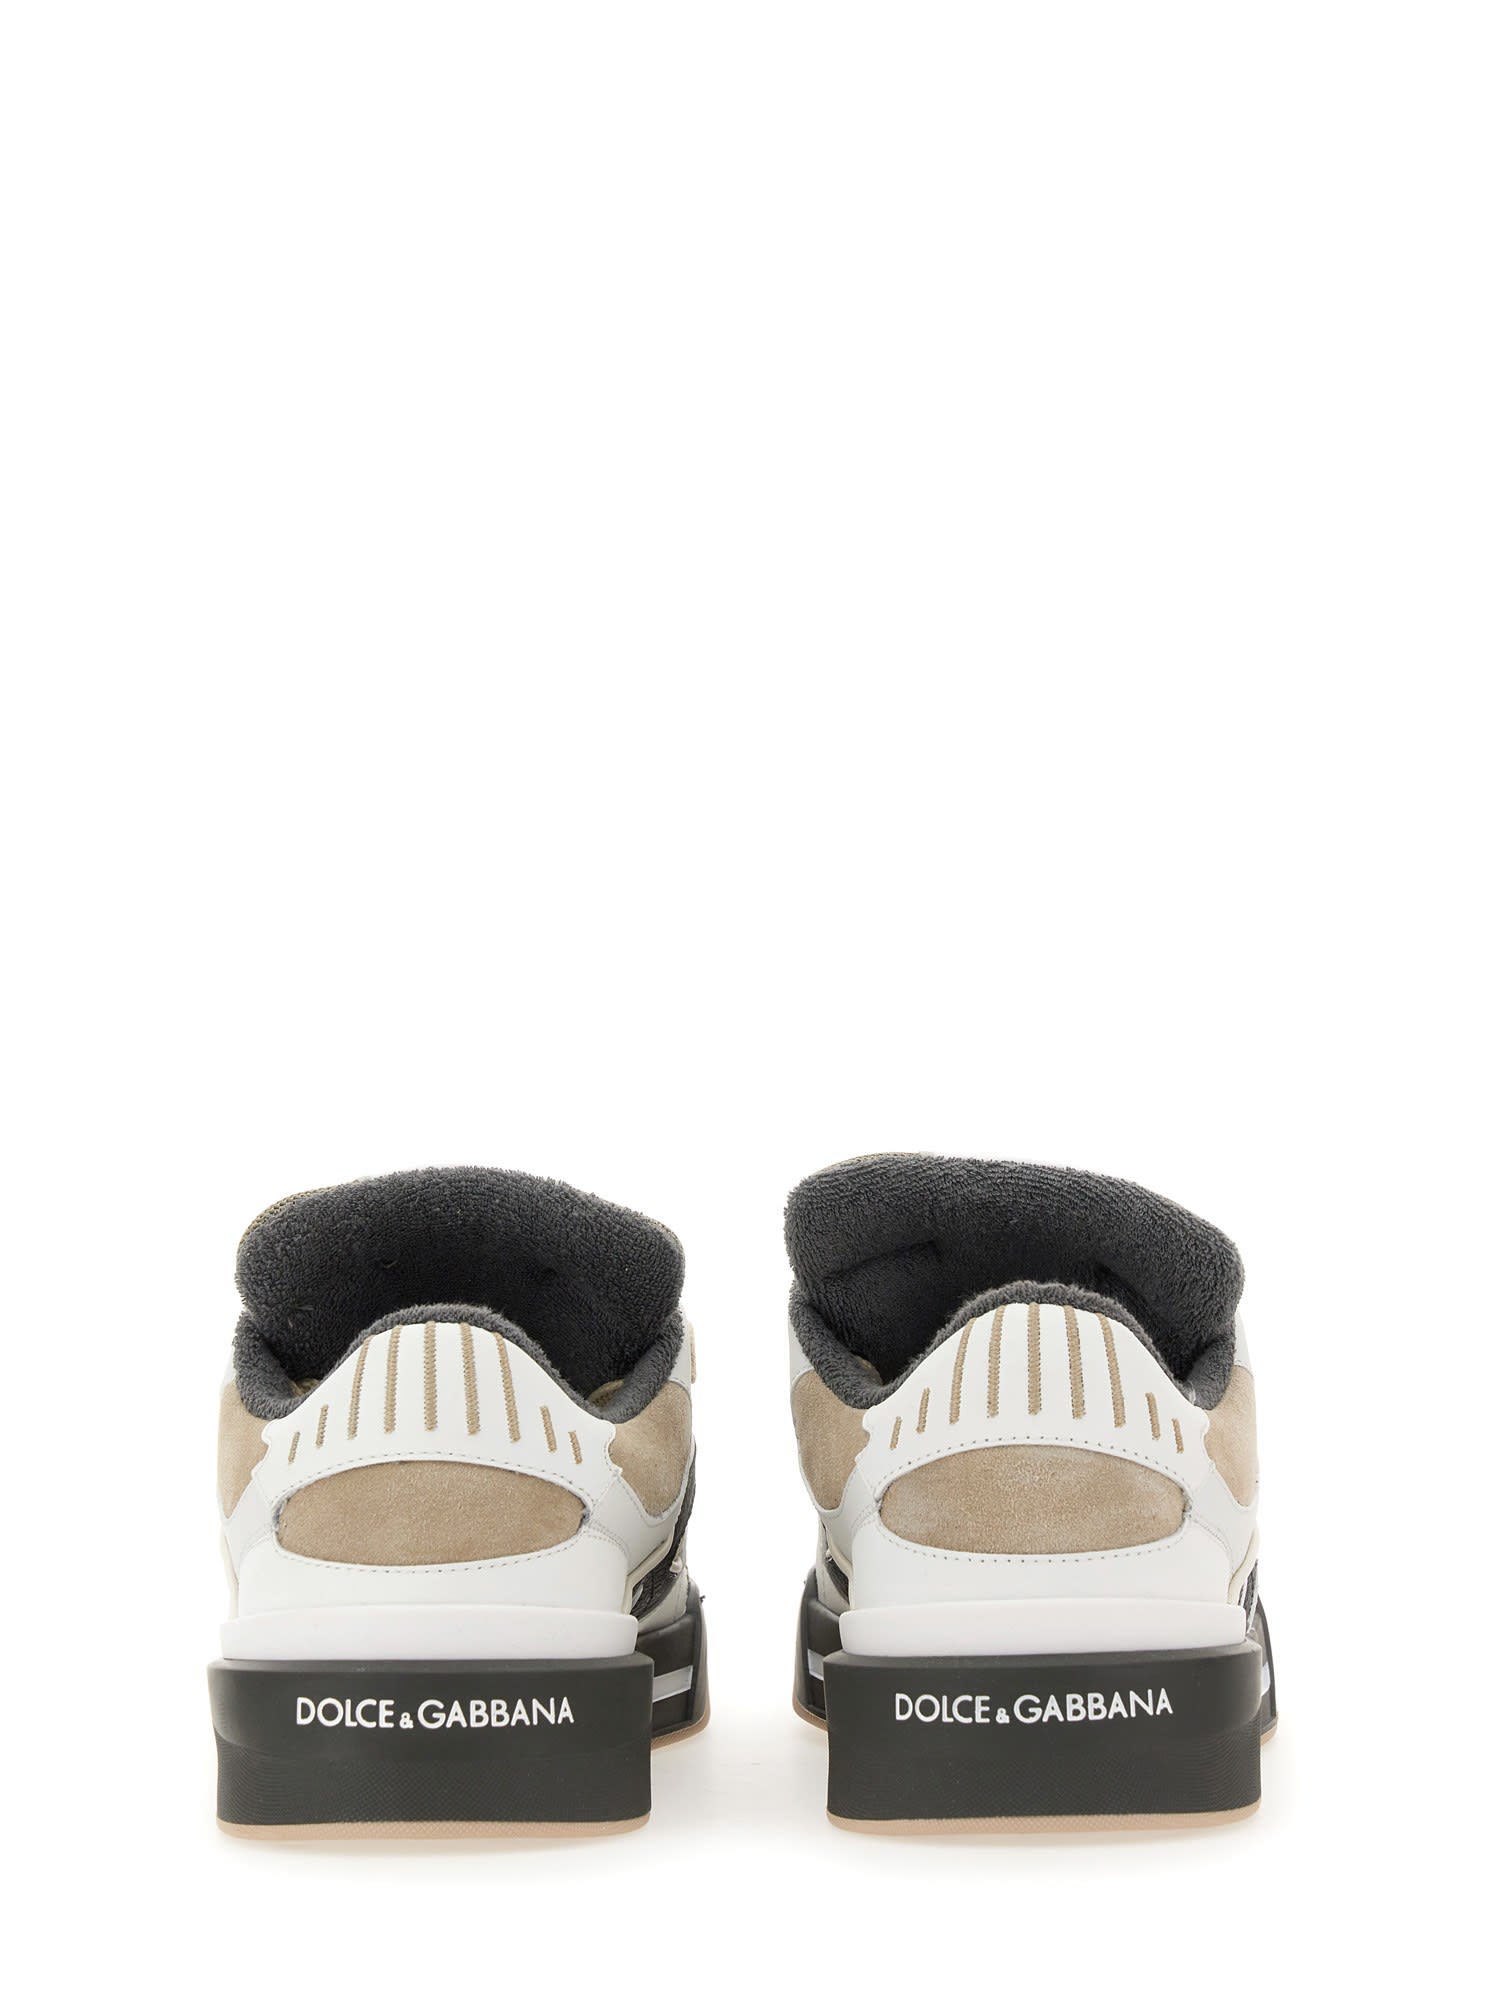 Shop Dolce & Gabbana Sneaker New Rome